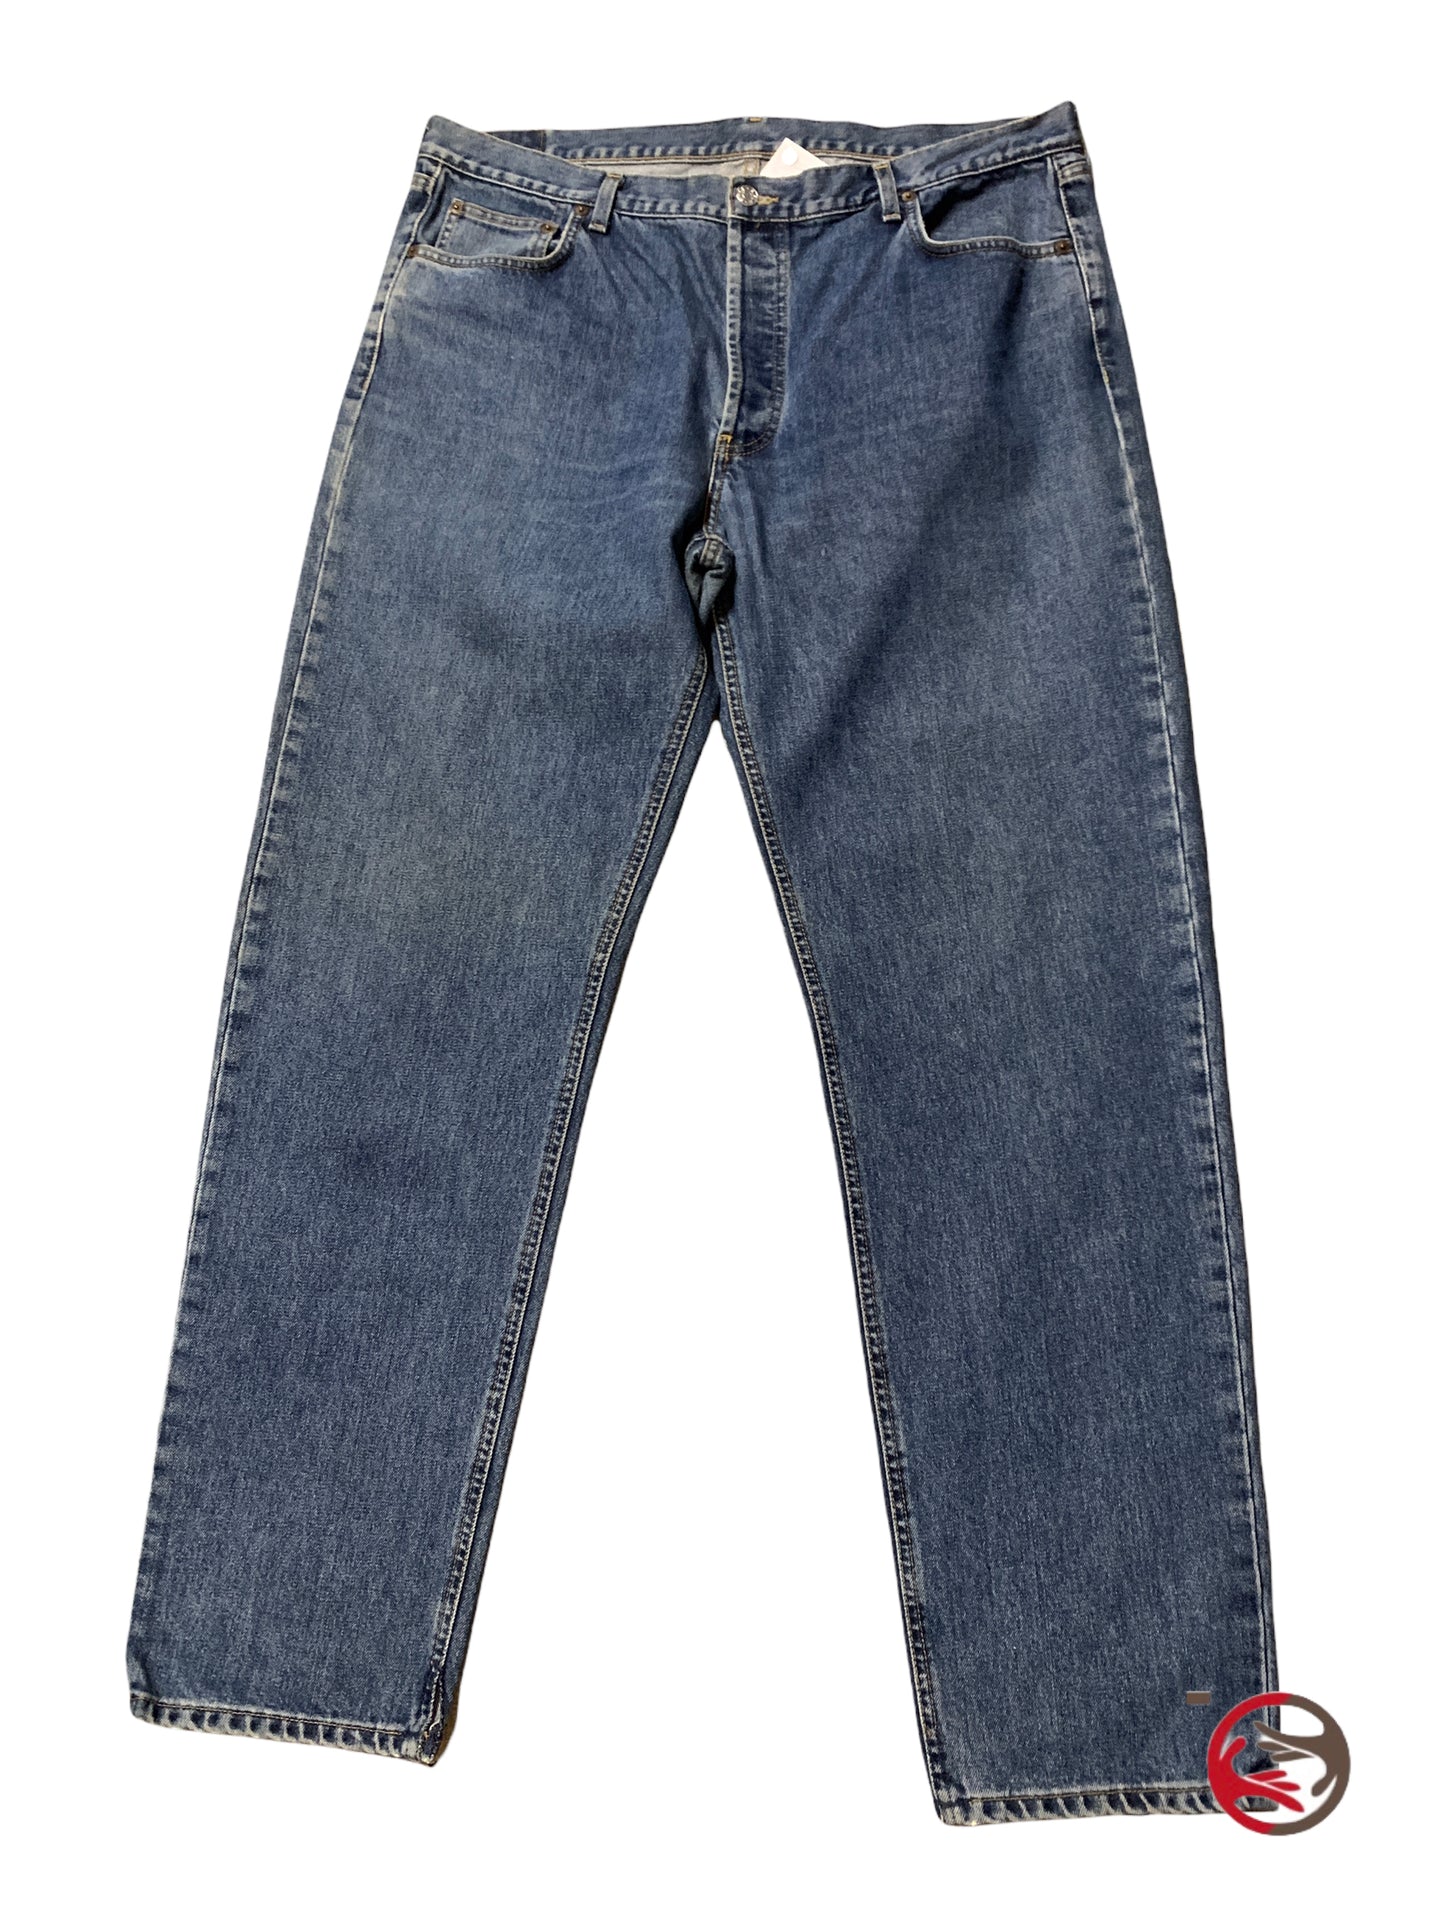 Men's Jeans Rifle trousers size 56 XXL